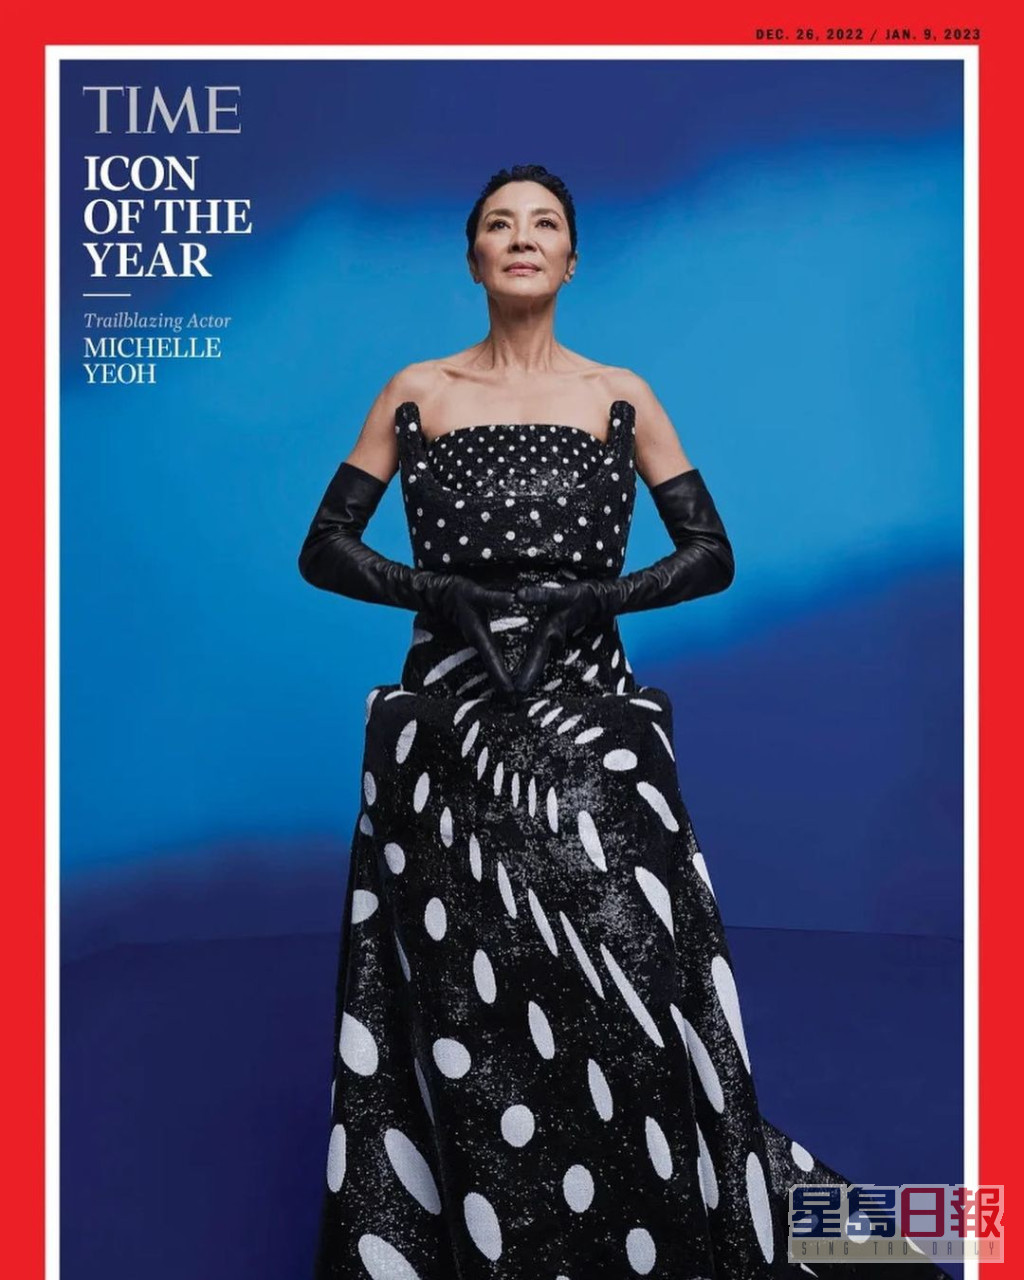 Michelle還獲《時代》（TIME）雜誌選為2022年度指標人物。